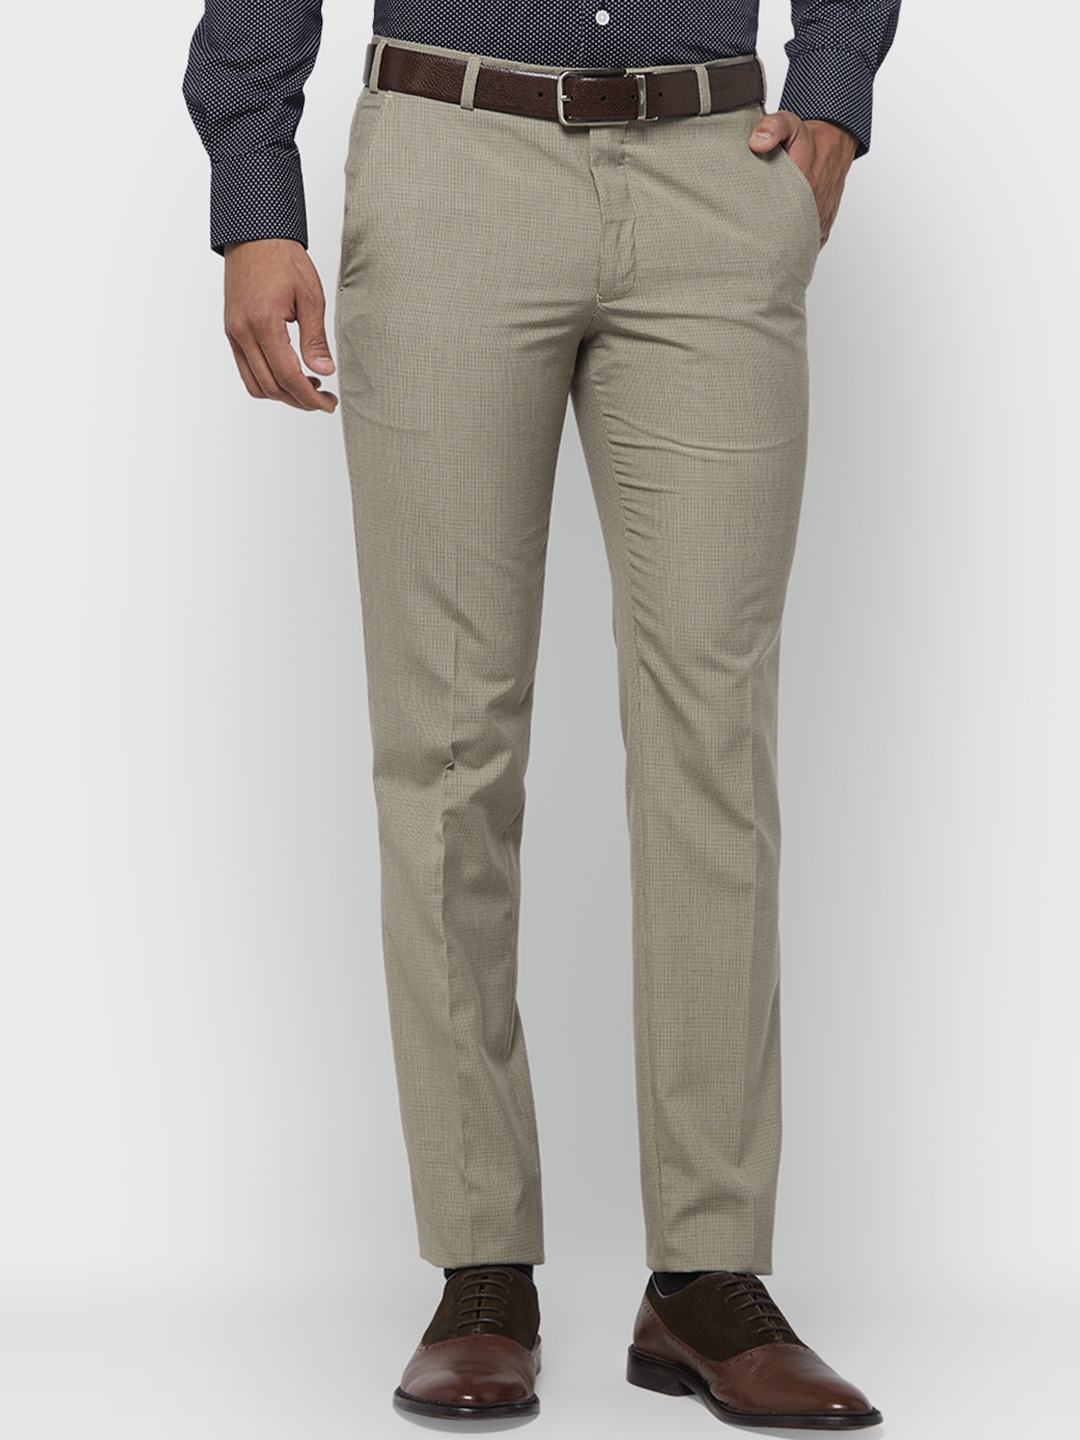 Buy Men Navy Check Slim Fit Formal Trousers Online  811025  Peter England